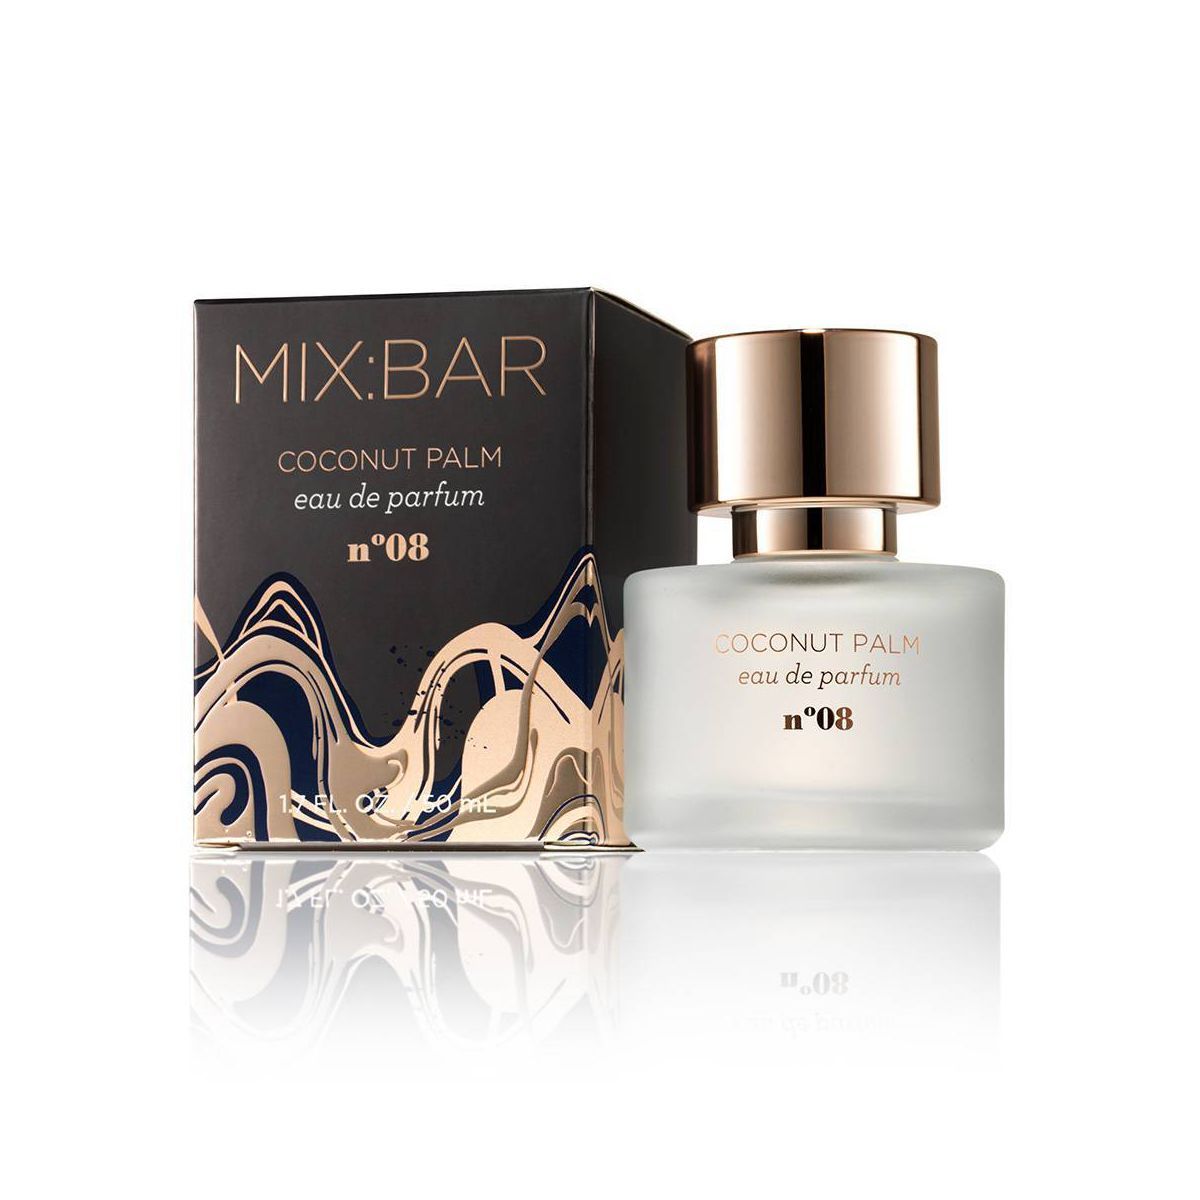 MIX:BAR EDP Perfume - Coconut Palm - 1.69 fl oz | Target